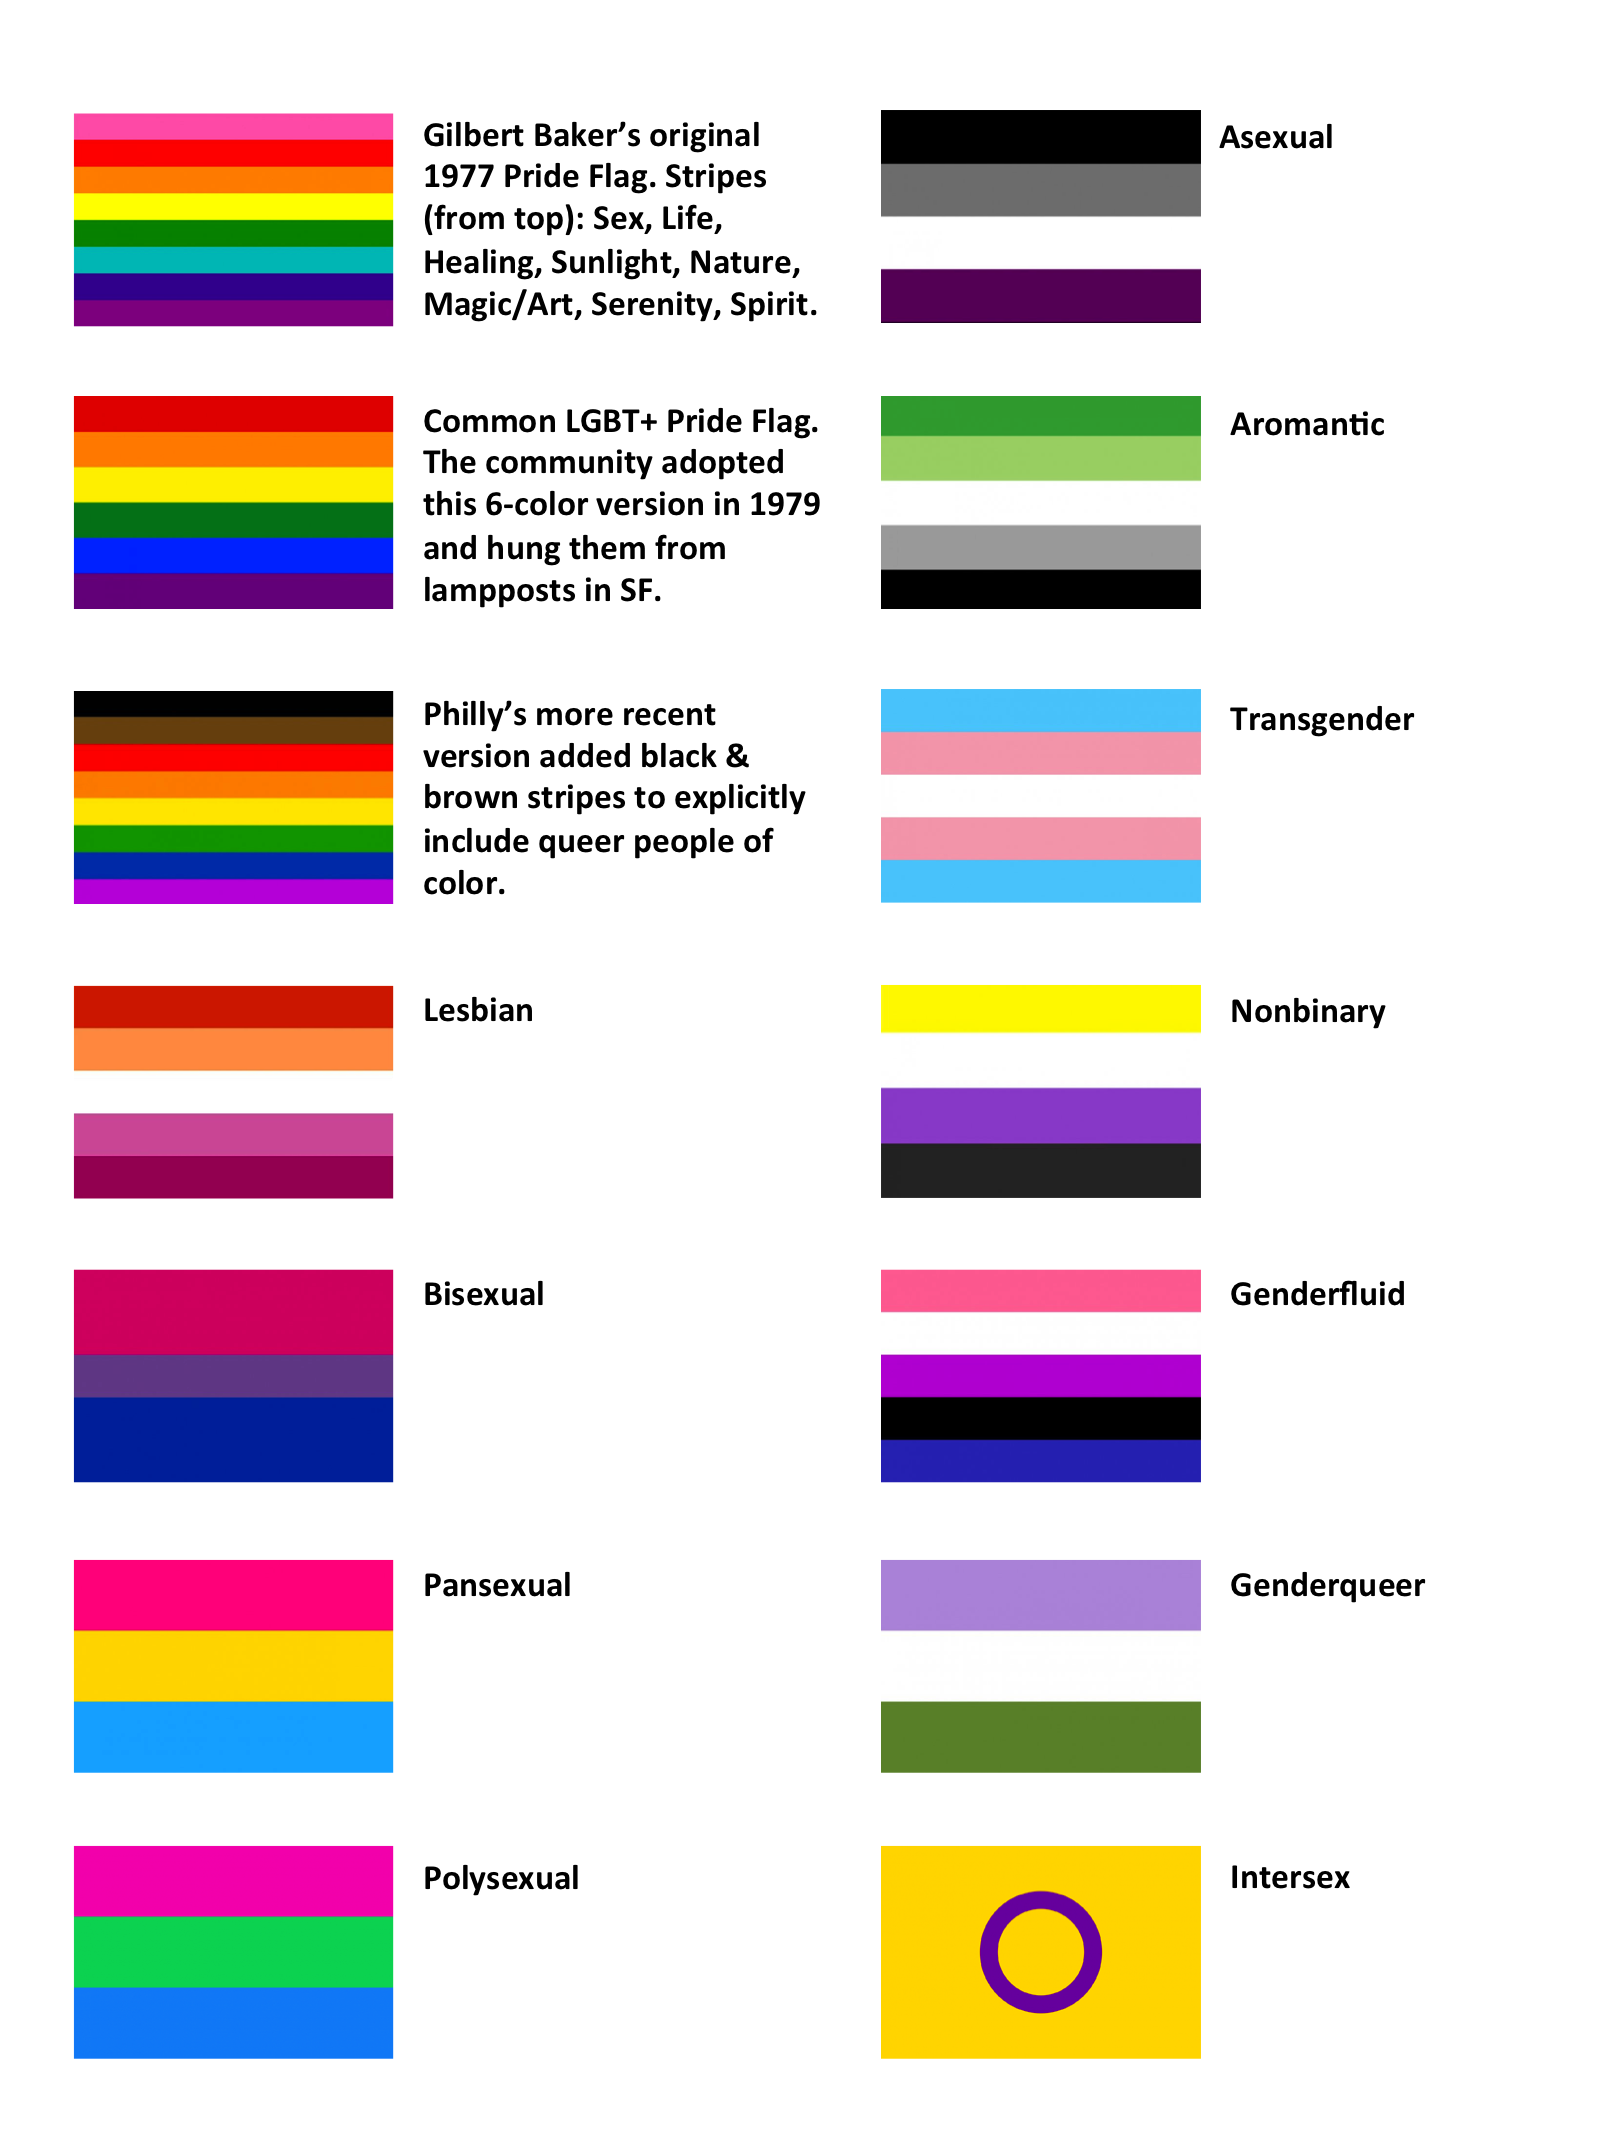 colors of gay flag represent